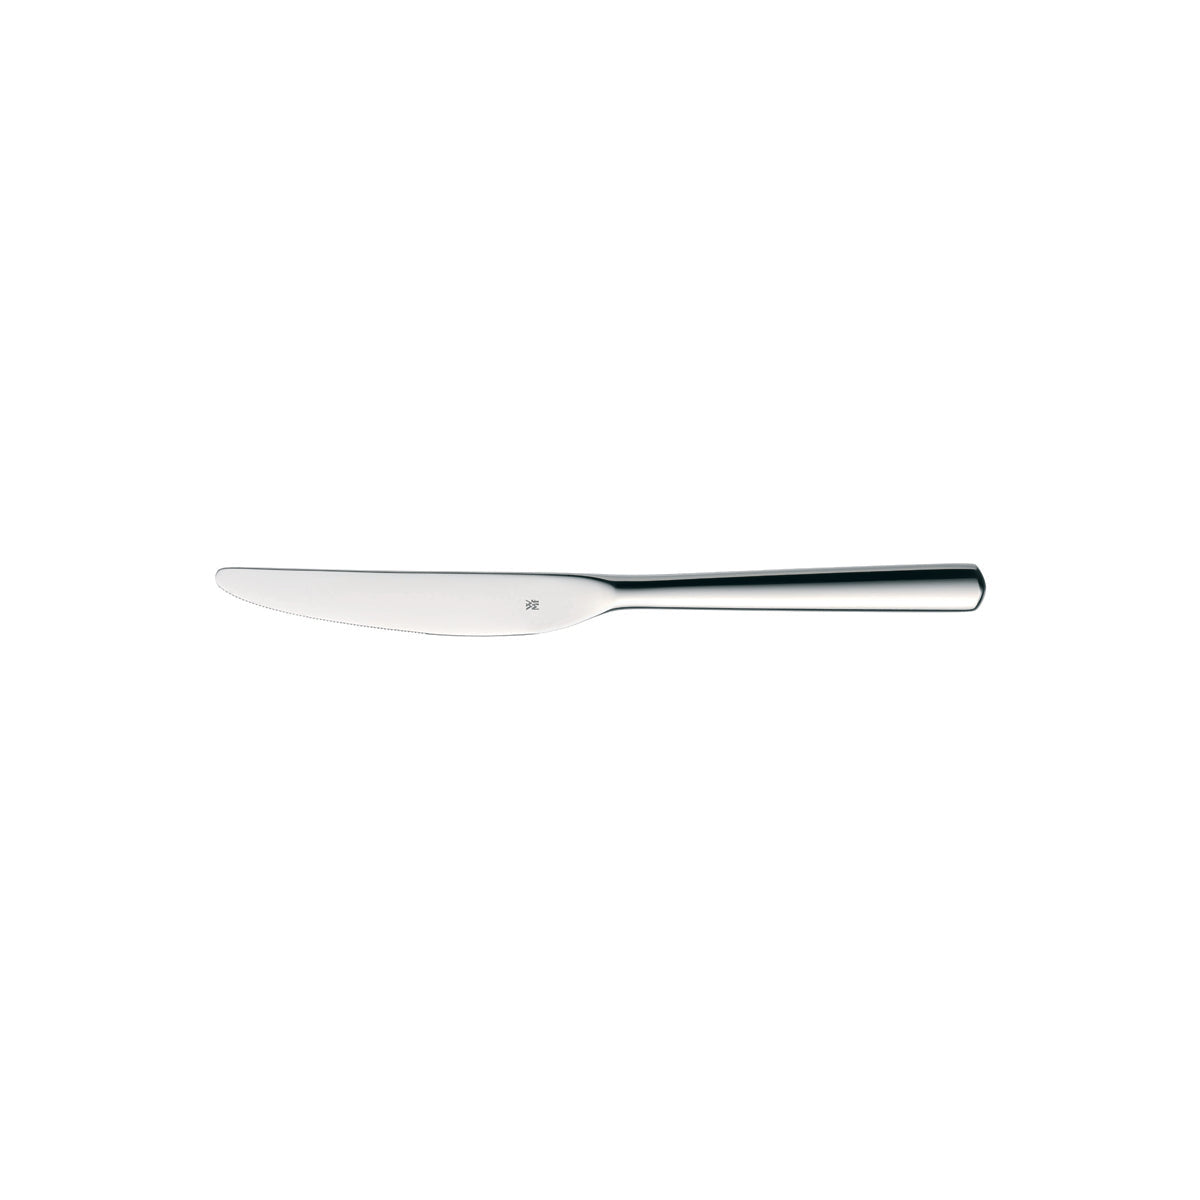 12.2303.6049 WMF Base Table Knife Stainless Steel Tomkin Australia Hospitality Supplies